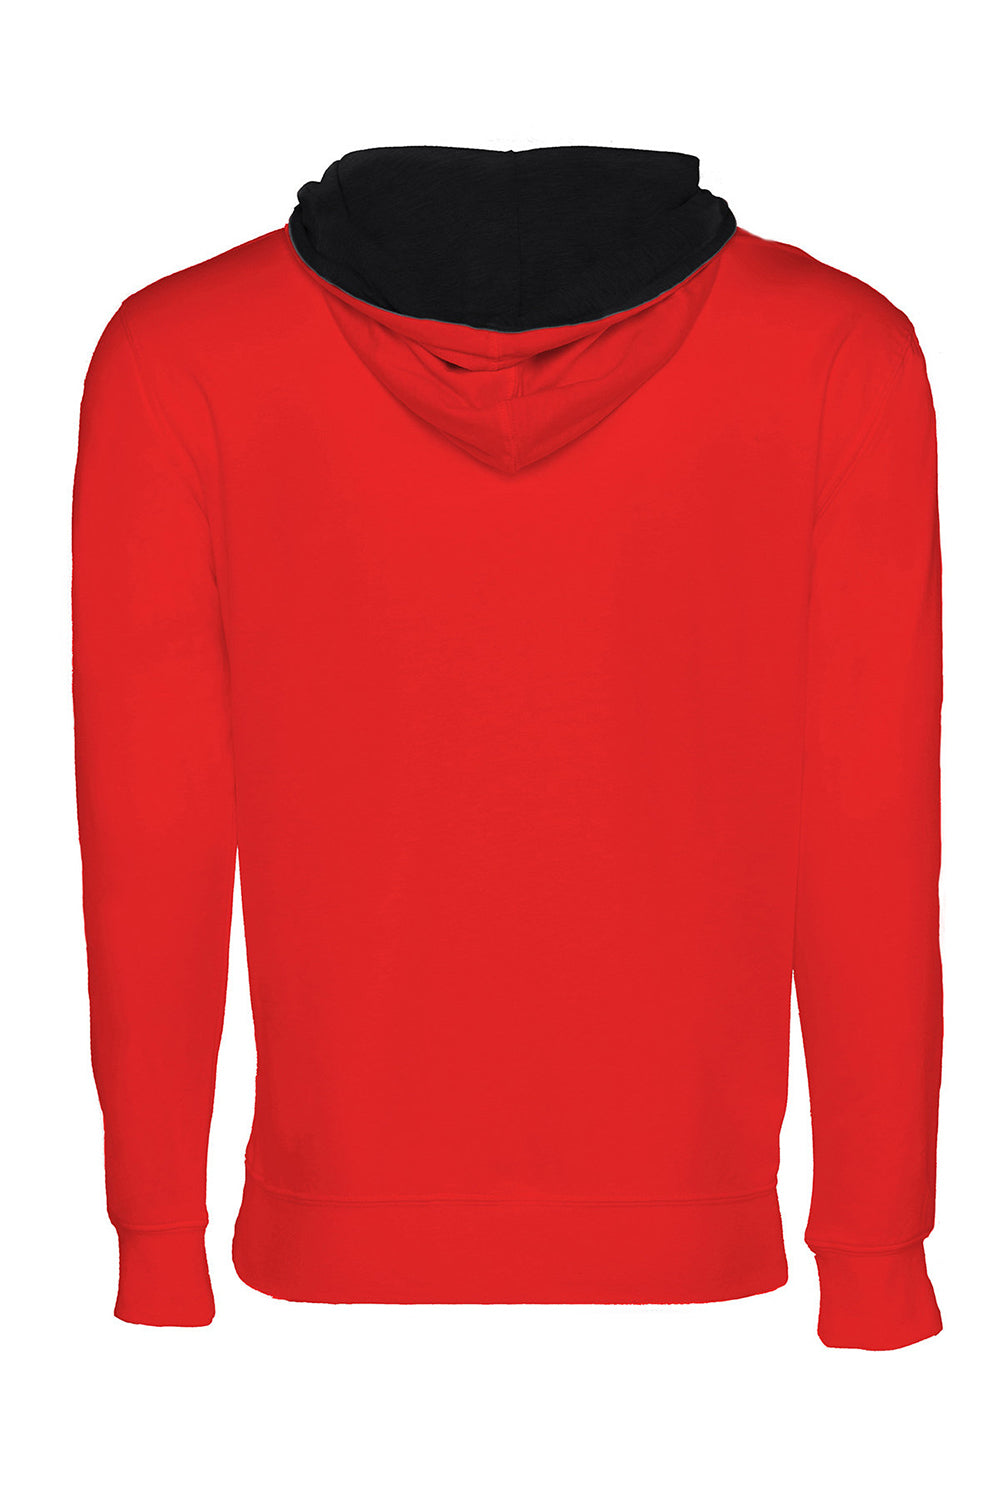 Next Level 9301 Mens French Terry Fleece Hooded Sweatshirt Hoodie Red/Black Flat Back